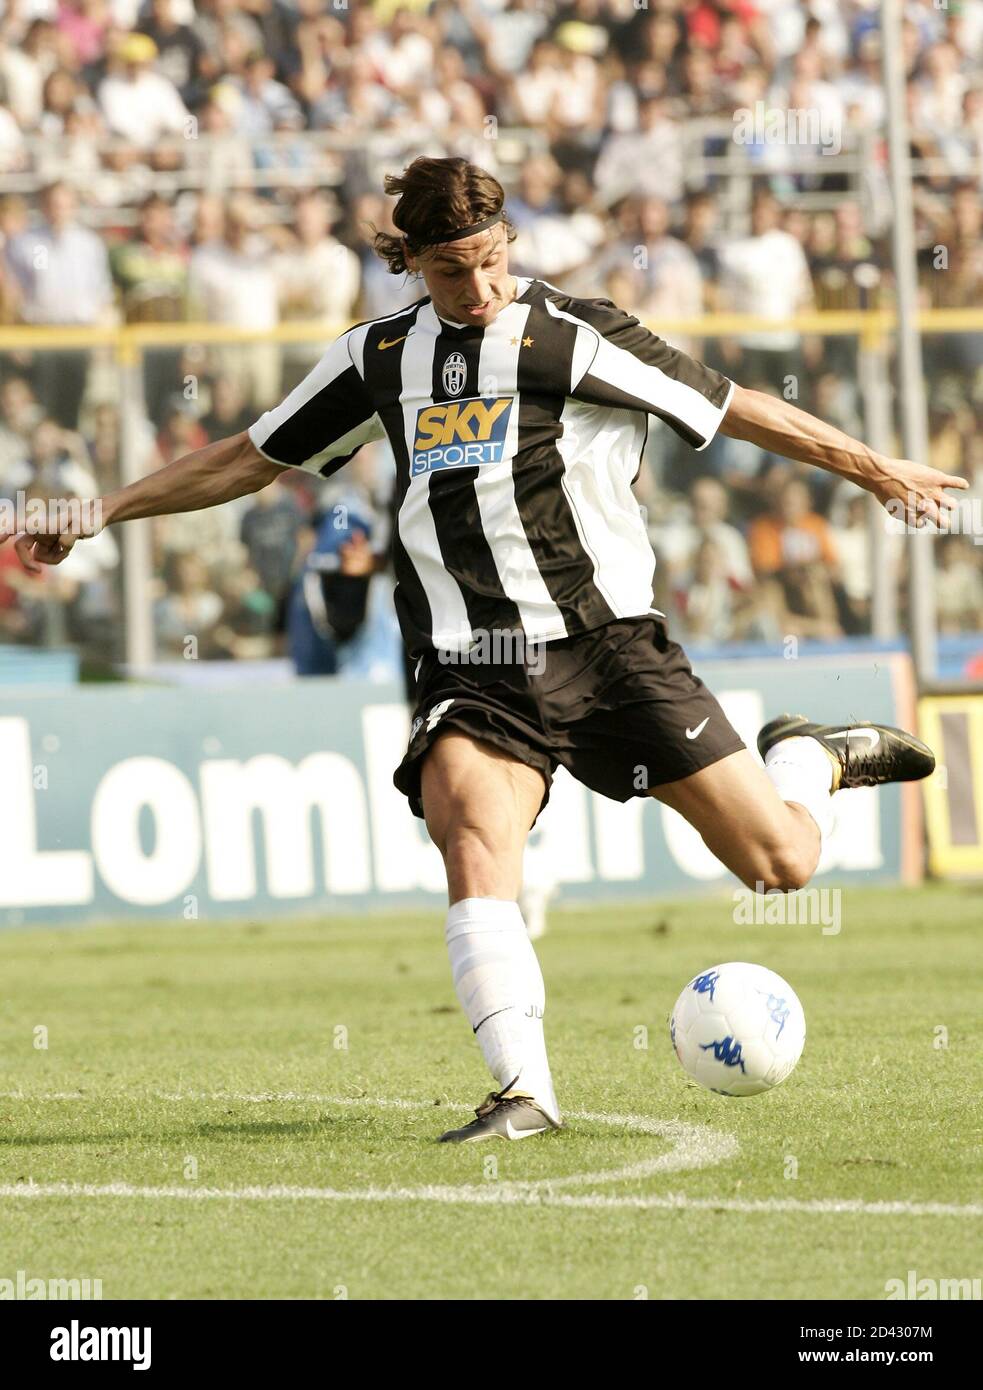 Juventus' Zlatan Ibrahimovic kicks the ball during their Serie A soccer  match at the Rigamonti Stadium in Brescia. September 12, 2004. Juventus won  3-0. REUTERS/Daniele La Monaca DLM/GB Stock Photo - Alamy